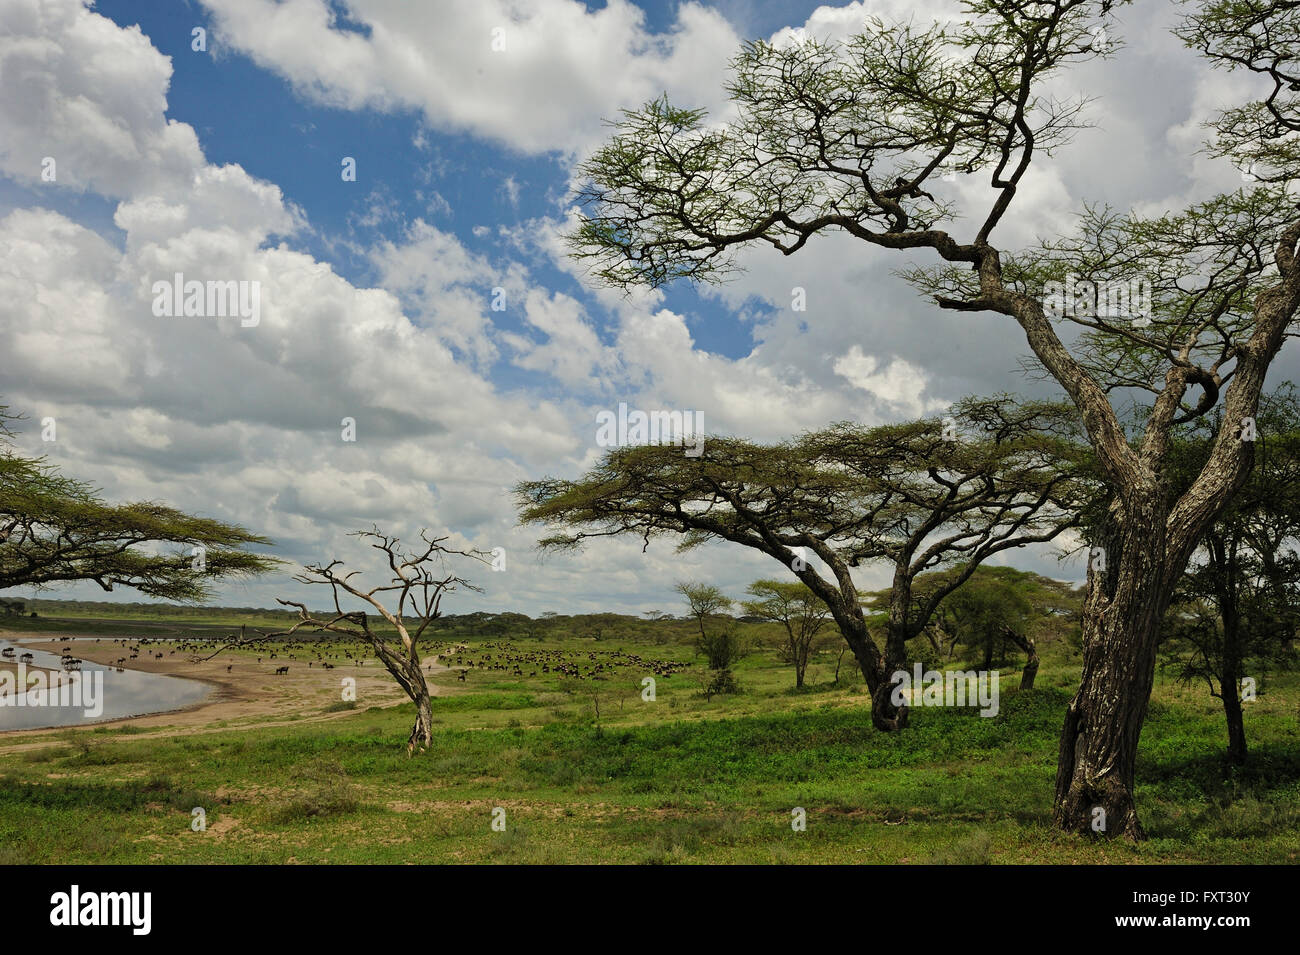 Woodlands with acacias in Ndutu, Ngorongoro Conservation Area, Tanzania Stock Photo